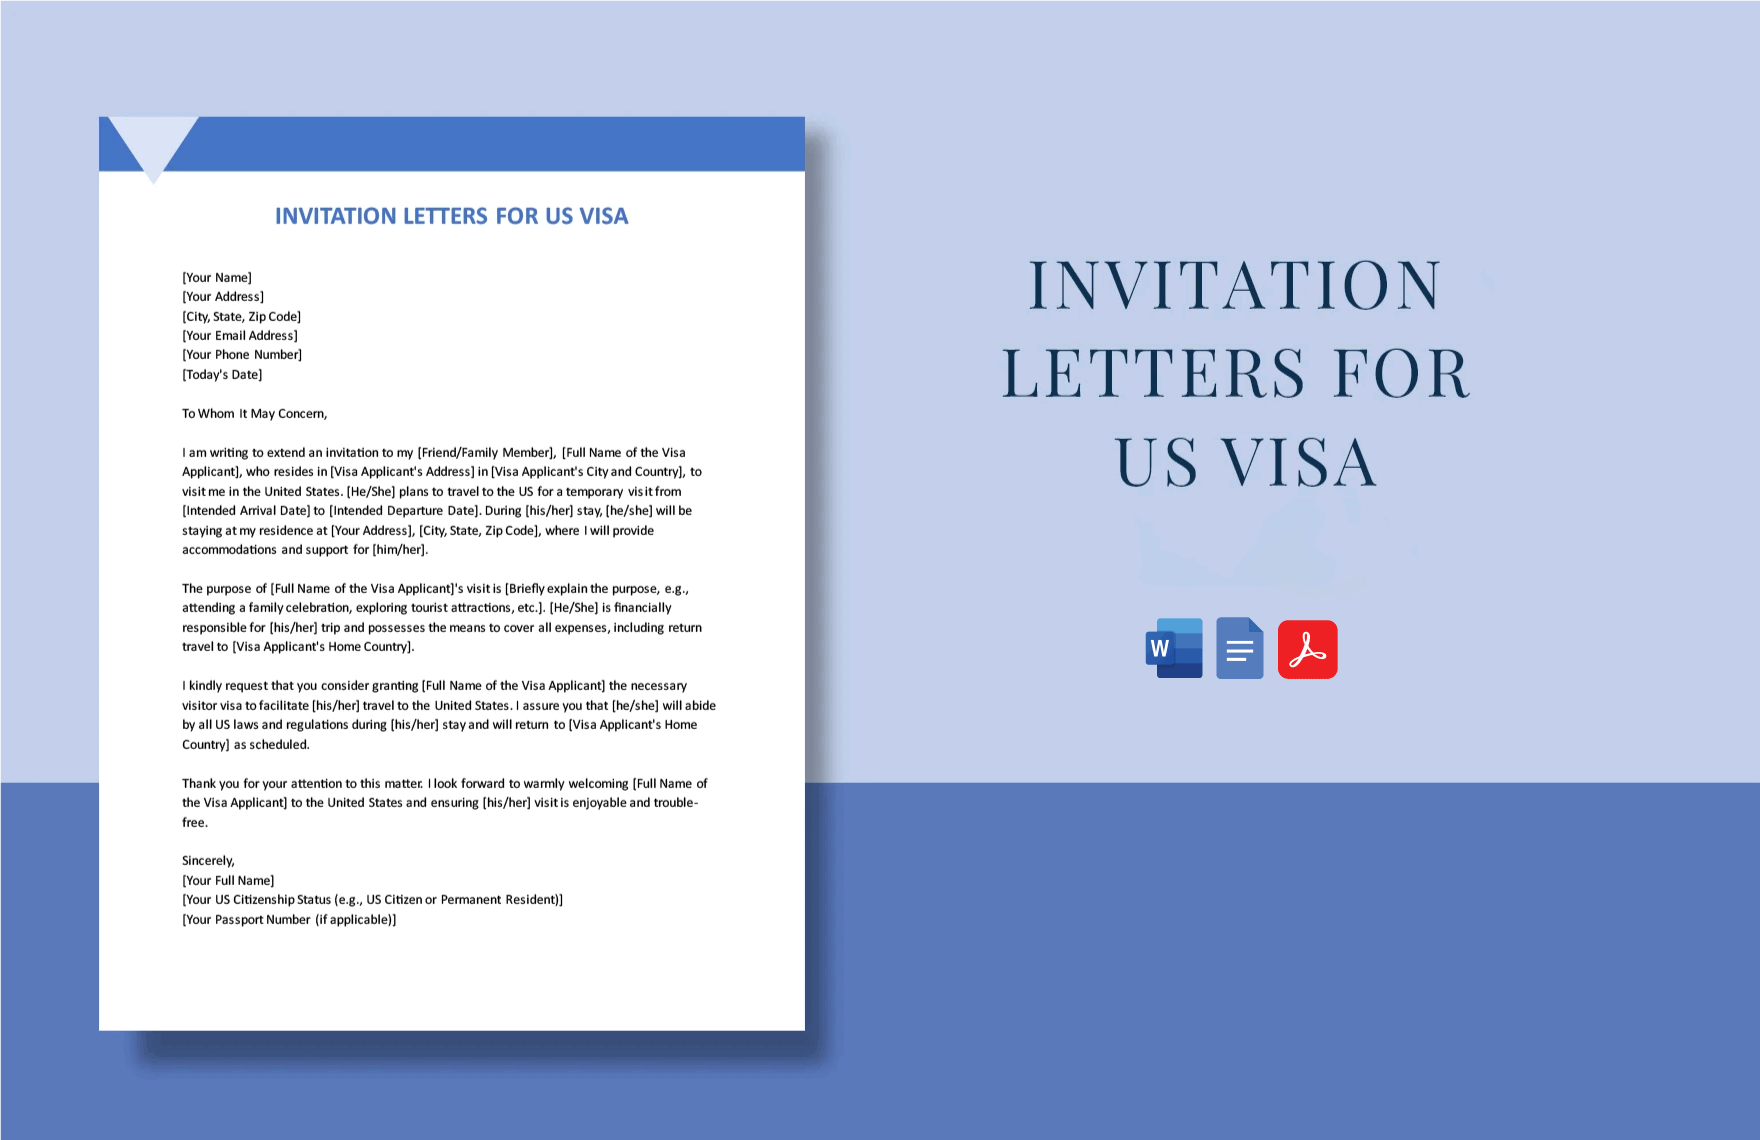 Invitation Letters For US Visa in Word, Google Docs, PDF